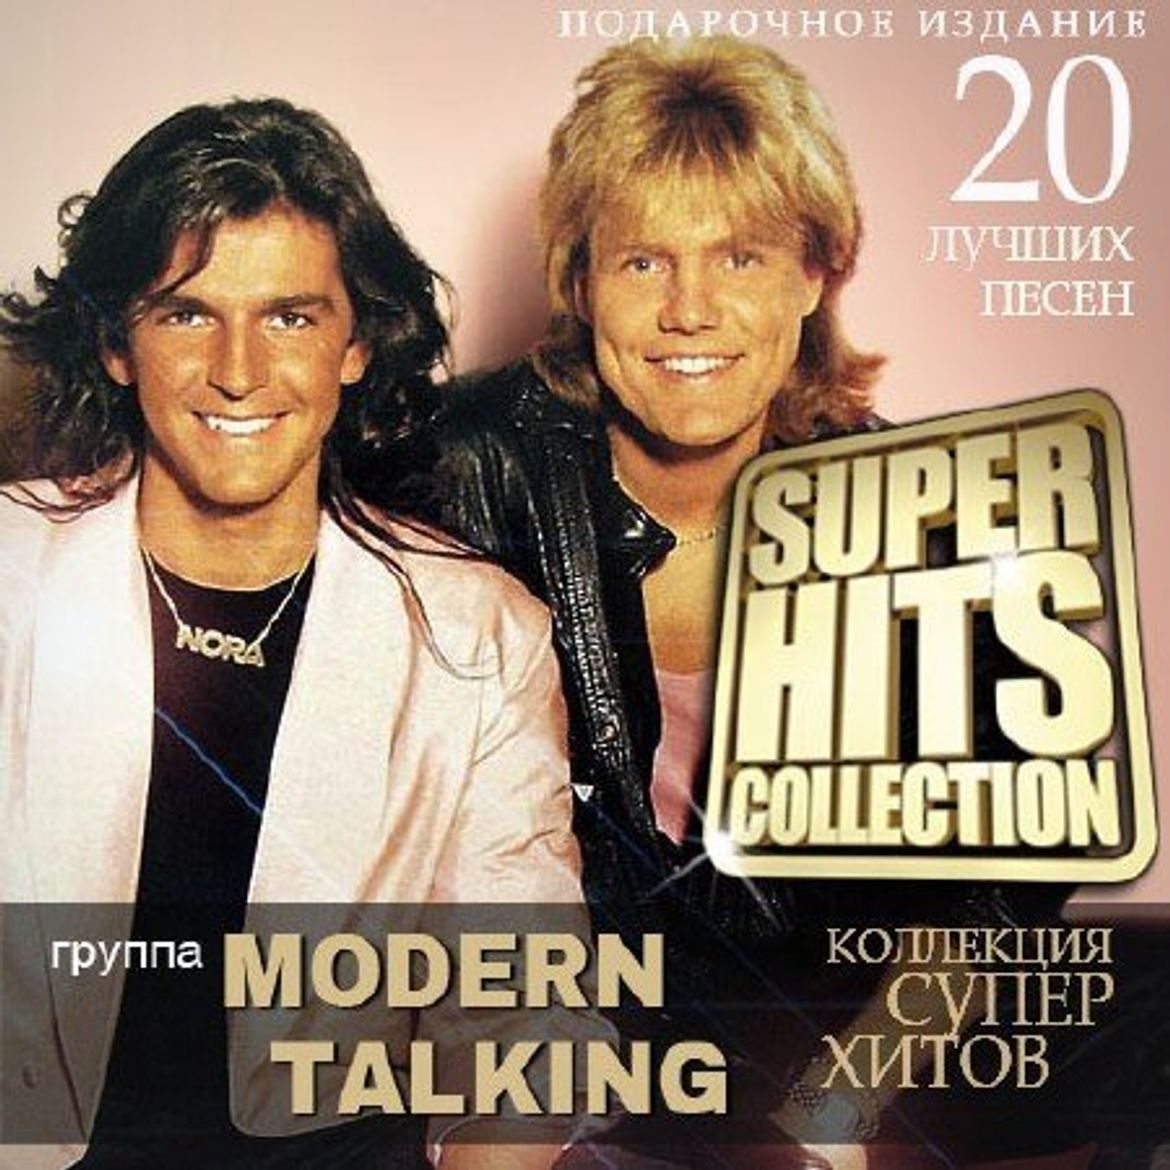 Talking collection. Модерн токинг. Группа Modern talking. Модерн токинг обложка. Modern talking - ready for Romance (album 1986) обложка.